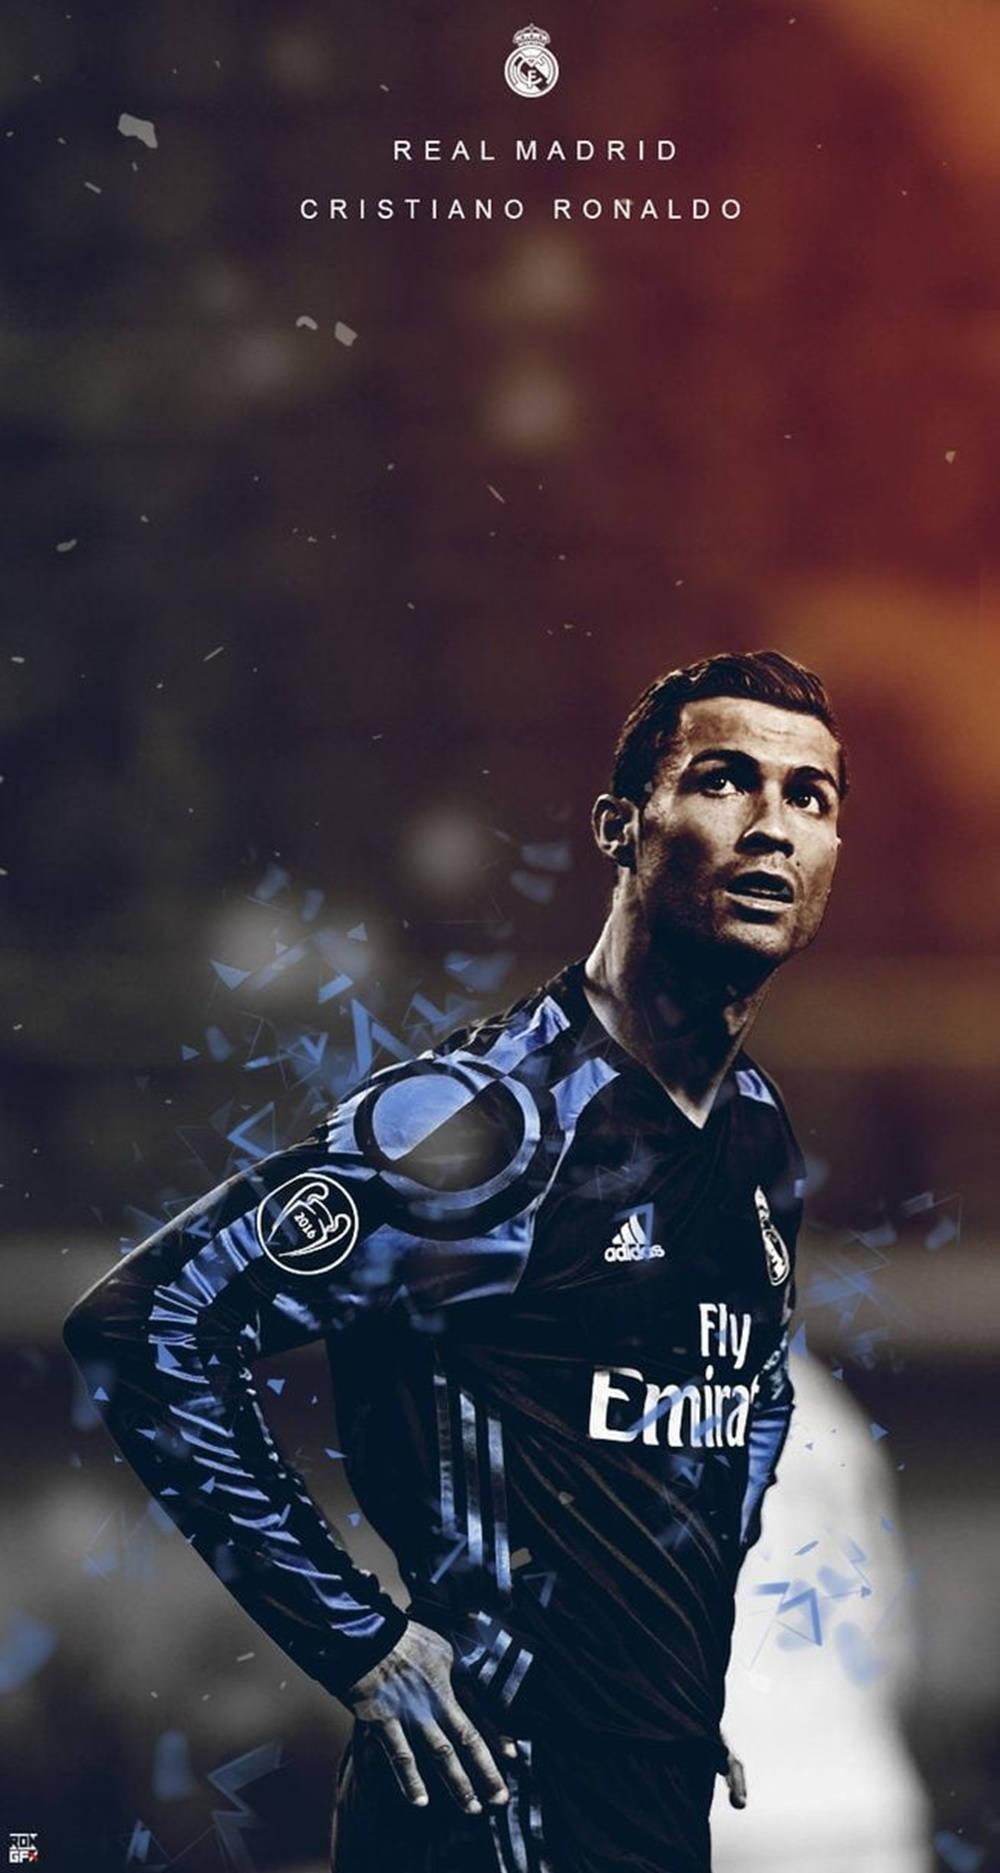 Cristiano Ronaldo Cool Real Madrid Digital Art Wallpaper